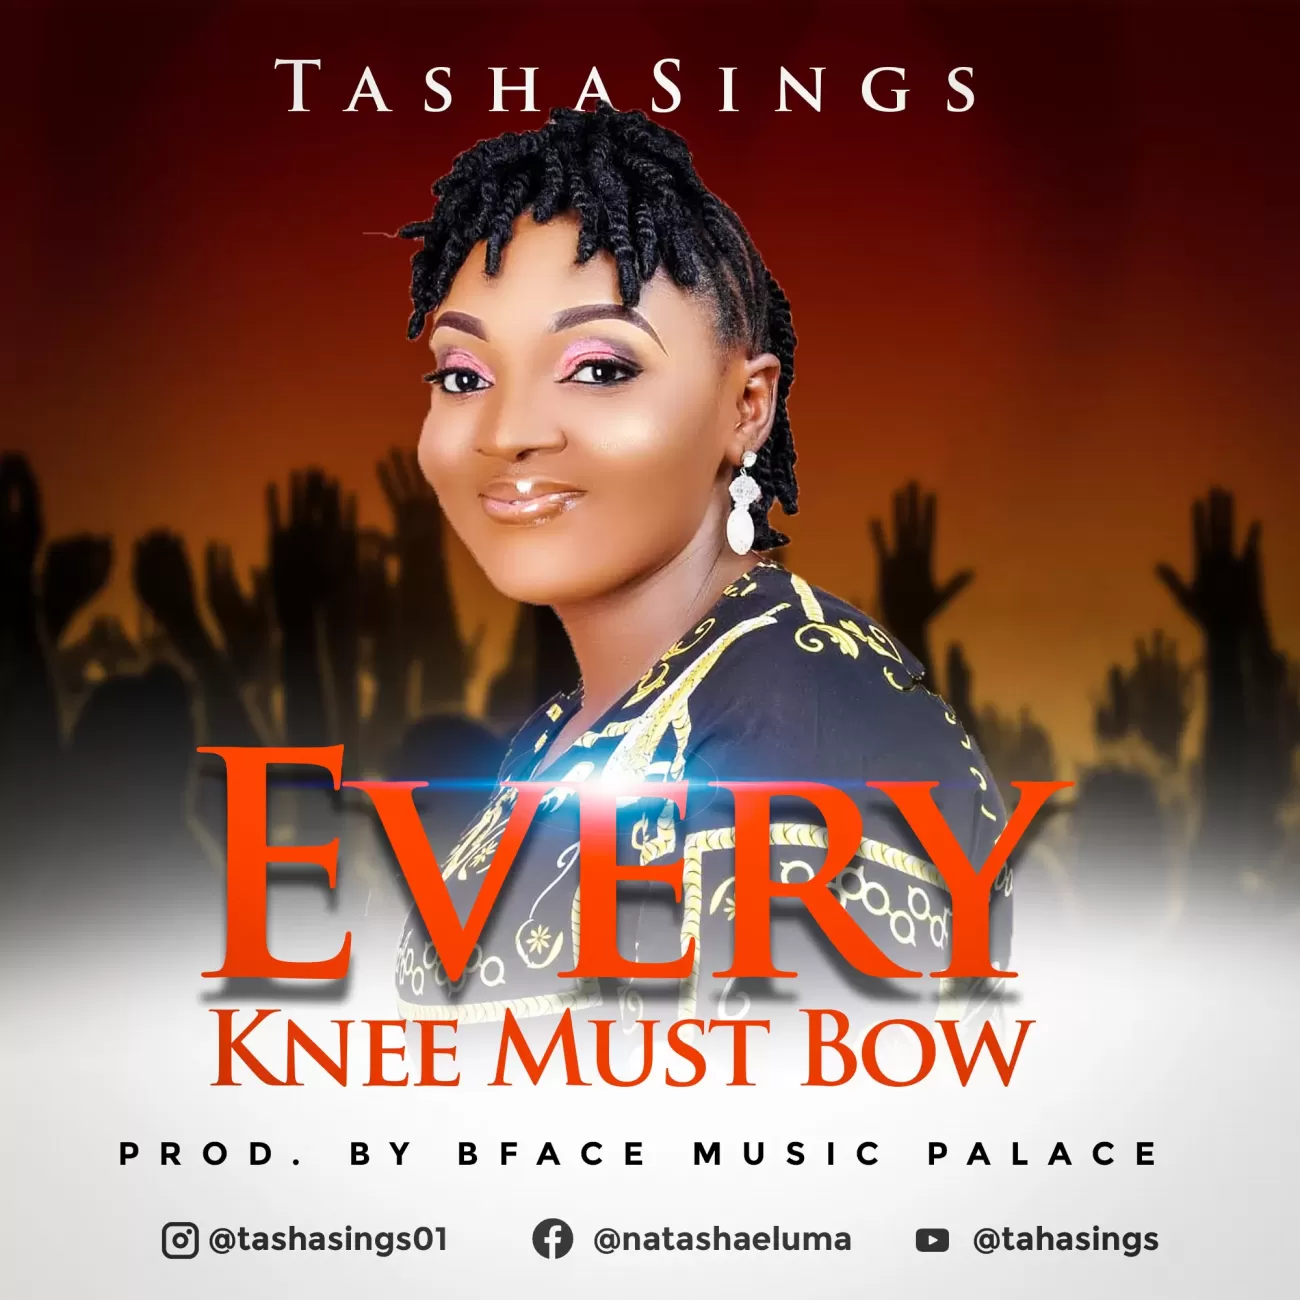 Tashasings - Every knee must bow